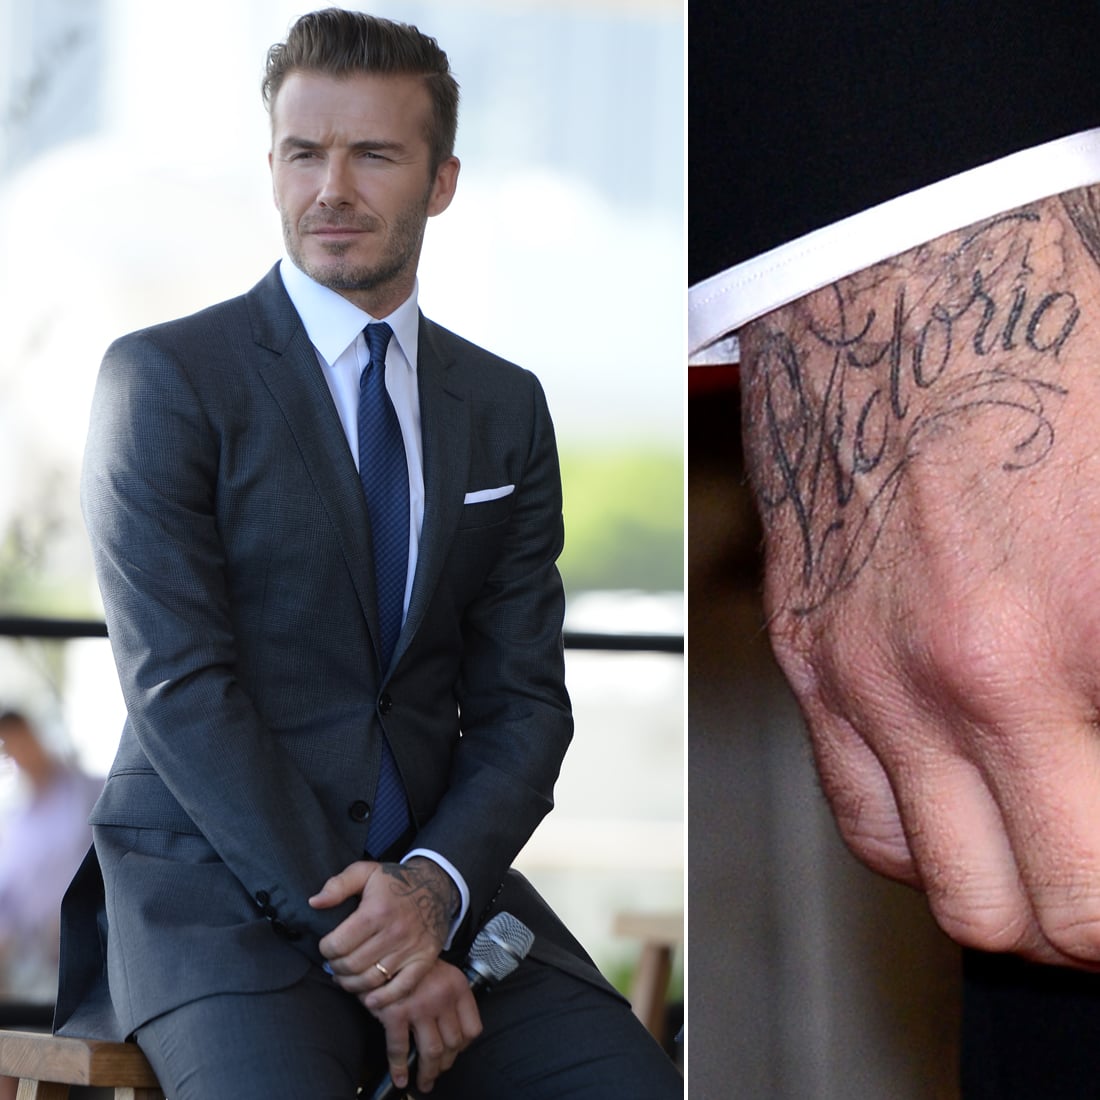 Victoria Beckham fans spot missing tattoo tribute to beau David Did you  get it removed  Celebrity News  Showbiz  TV  Expresscouk